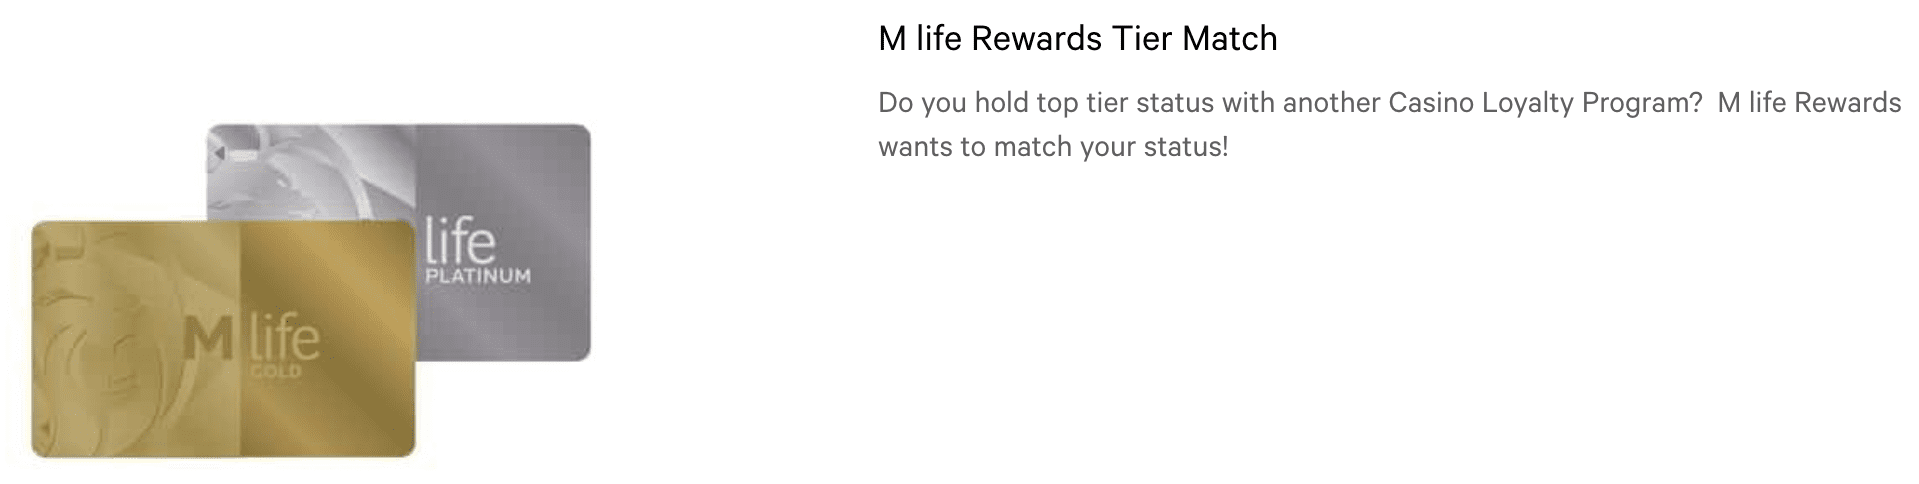 Mlife Tier Match | Mlife Status Match | MGM M life Rewards Loyalty Program